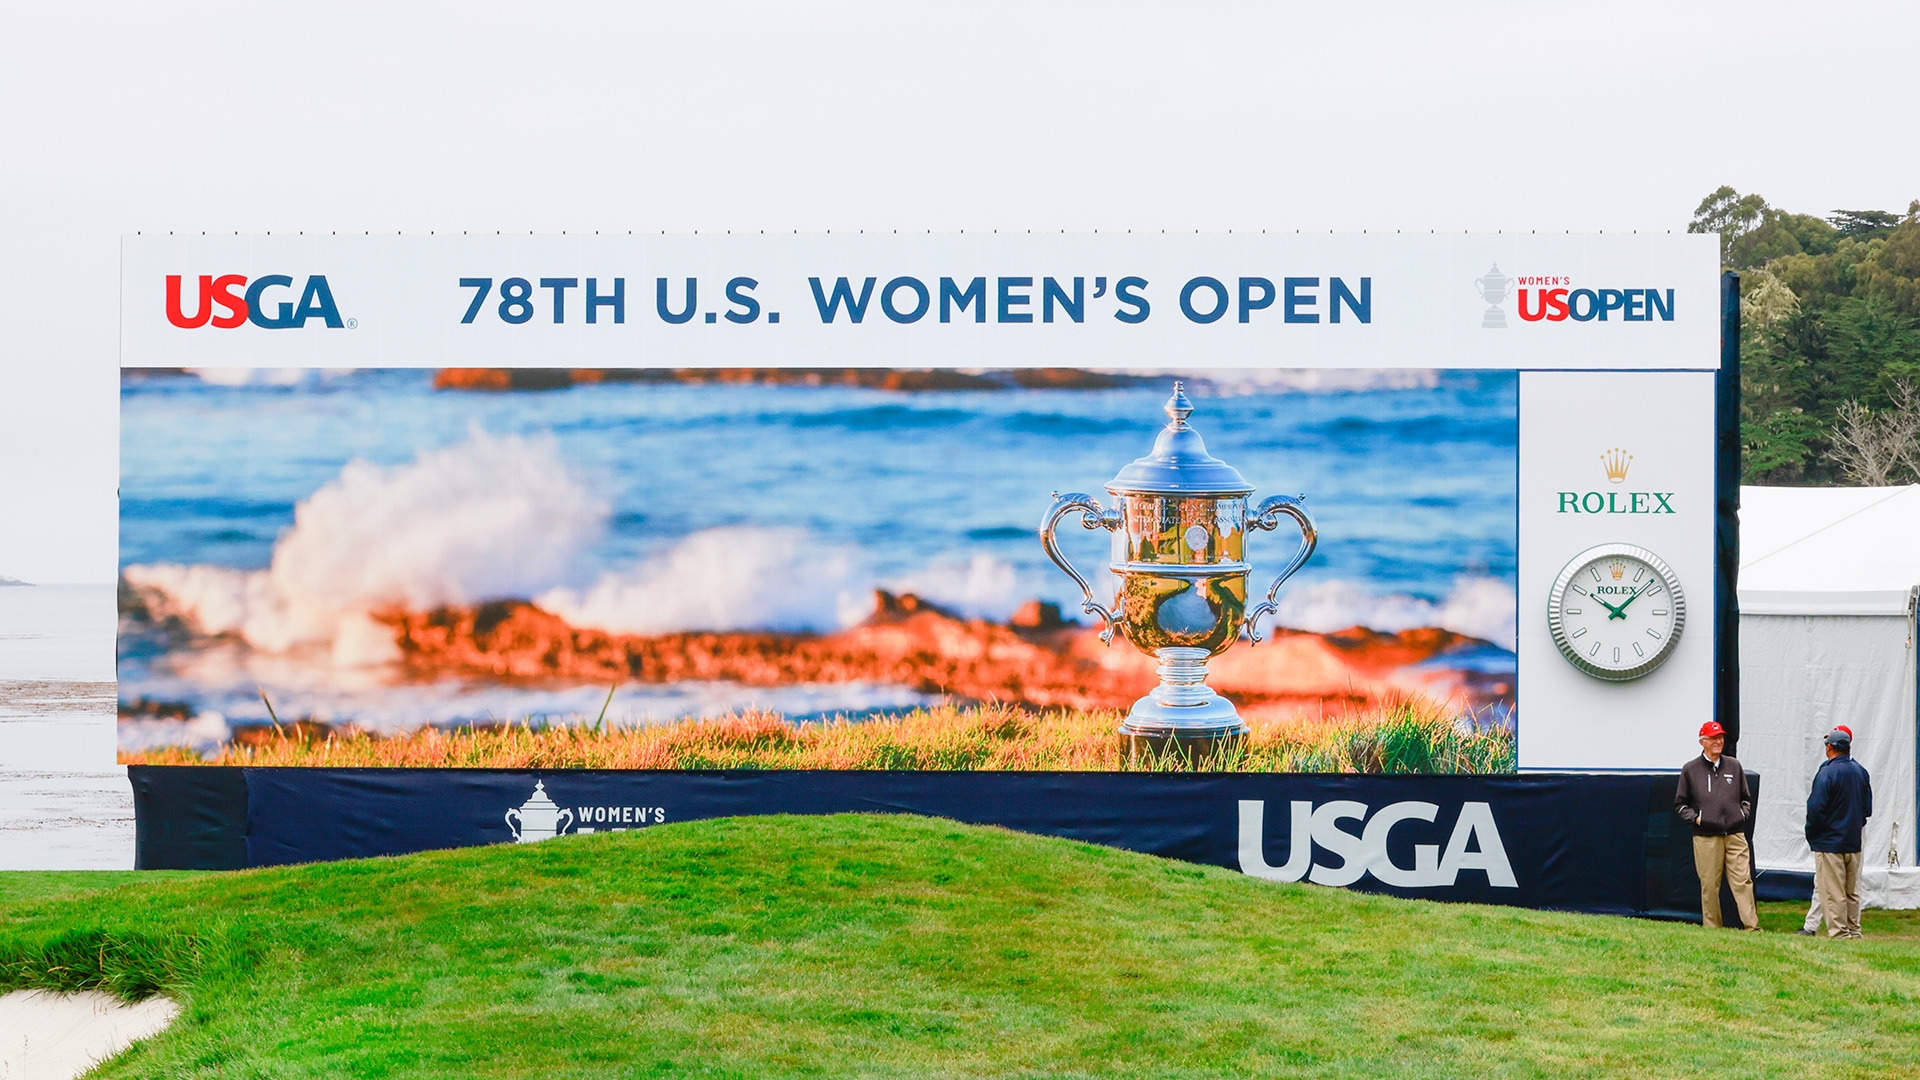 Winner’s share and full purse breakdown for the 78th U.S. Women’s Open